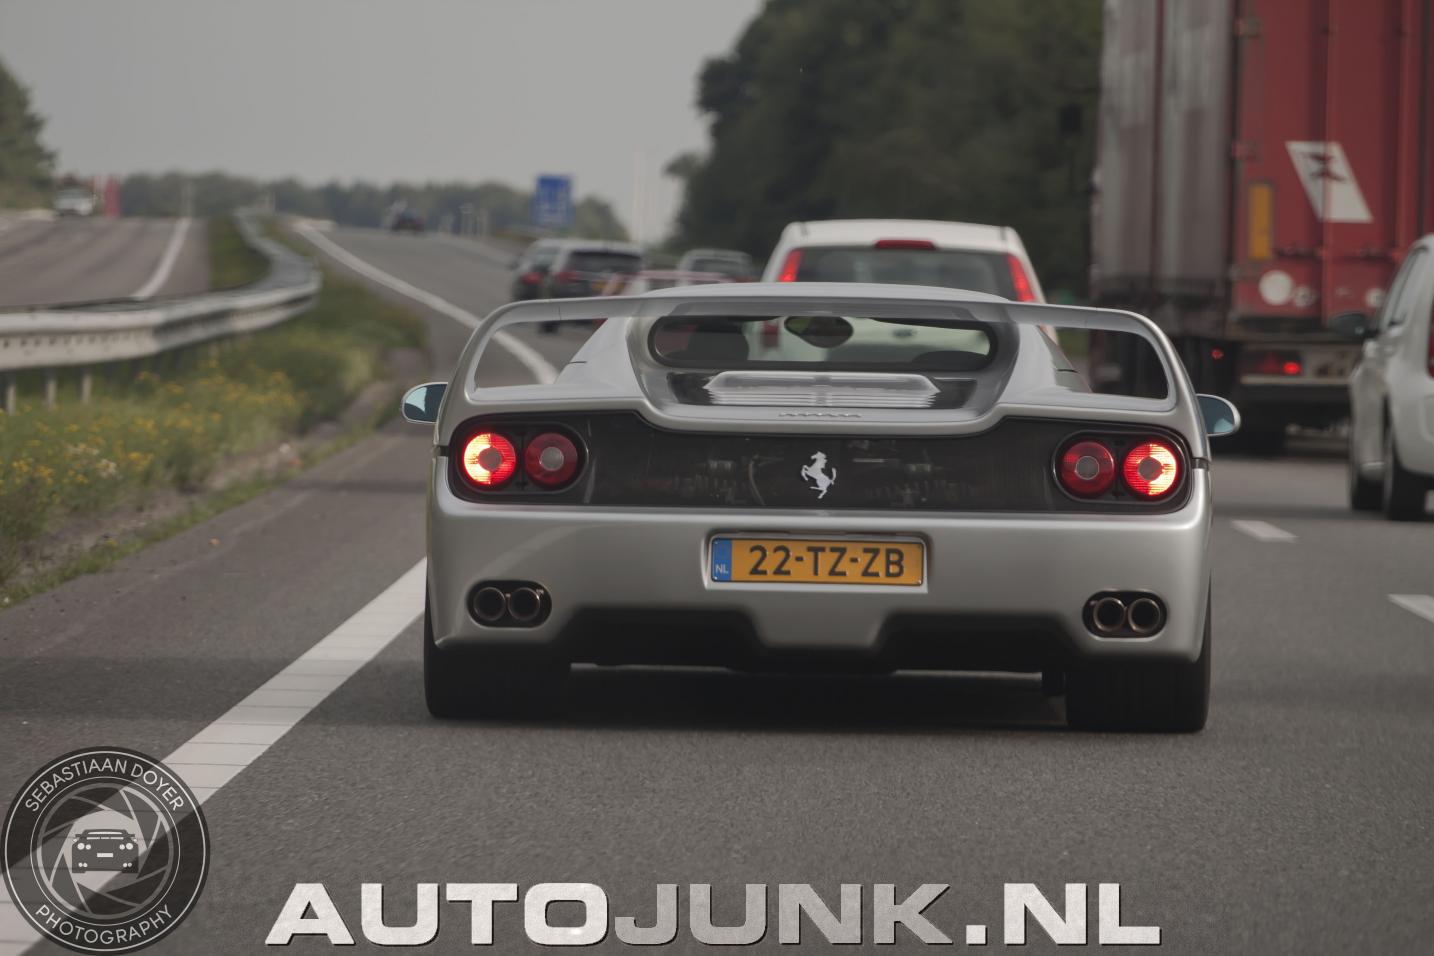 legendarisch-f40-en-f50-samen-op-de-nederlandse-snelweg_01.jpg